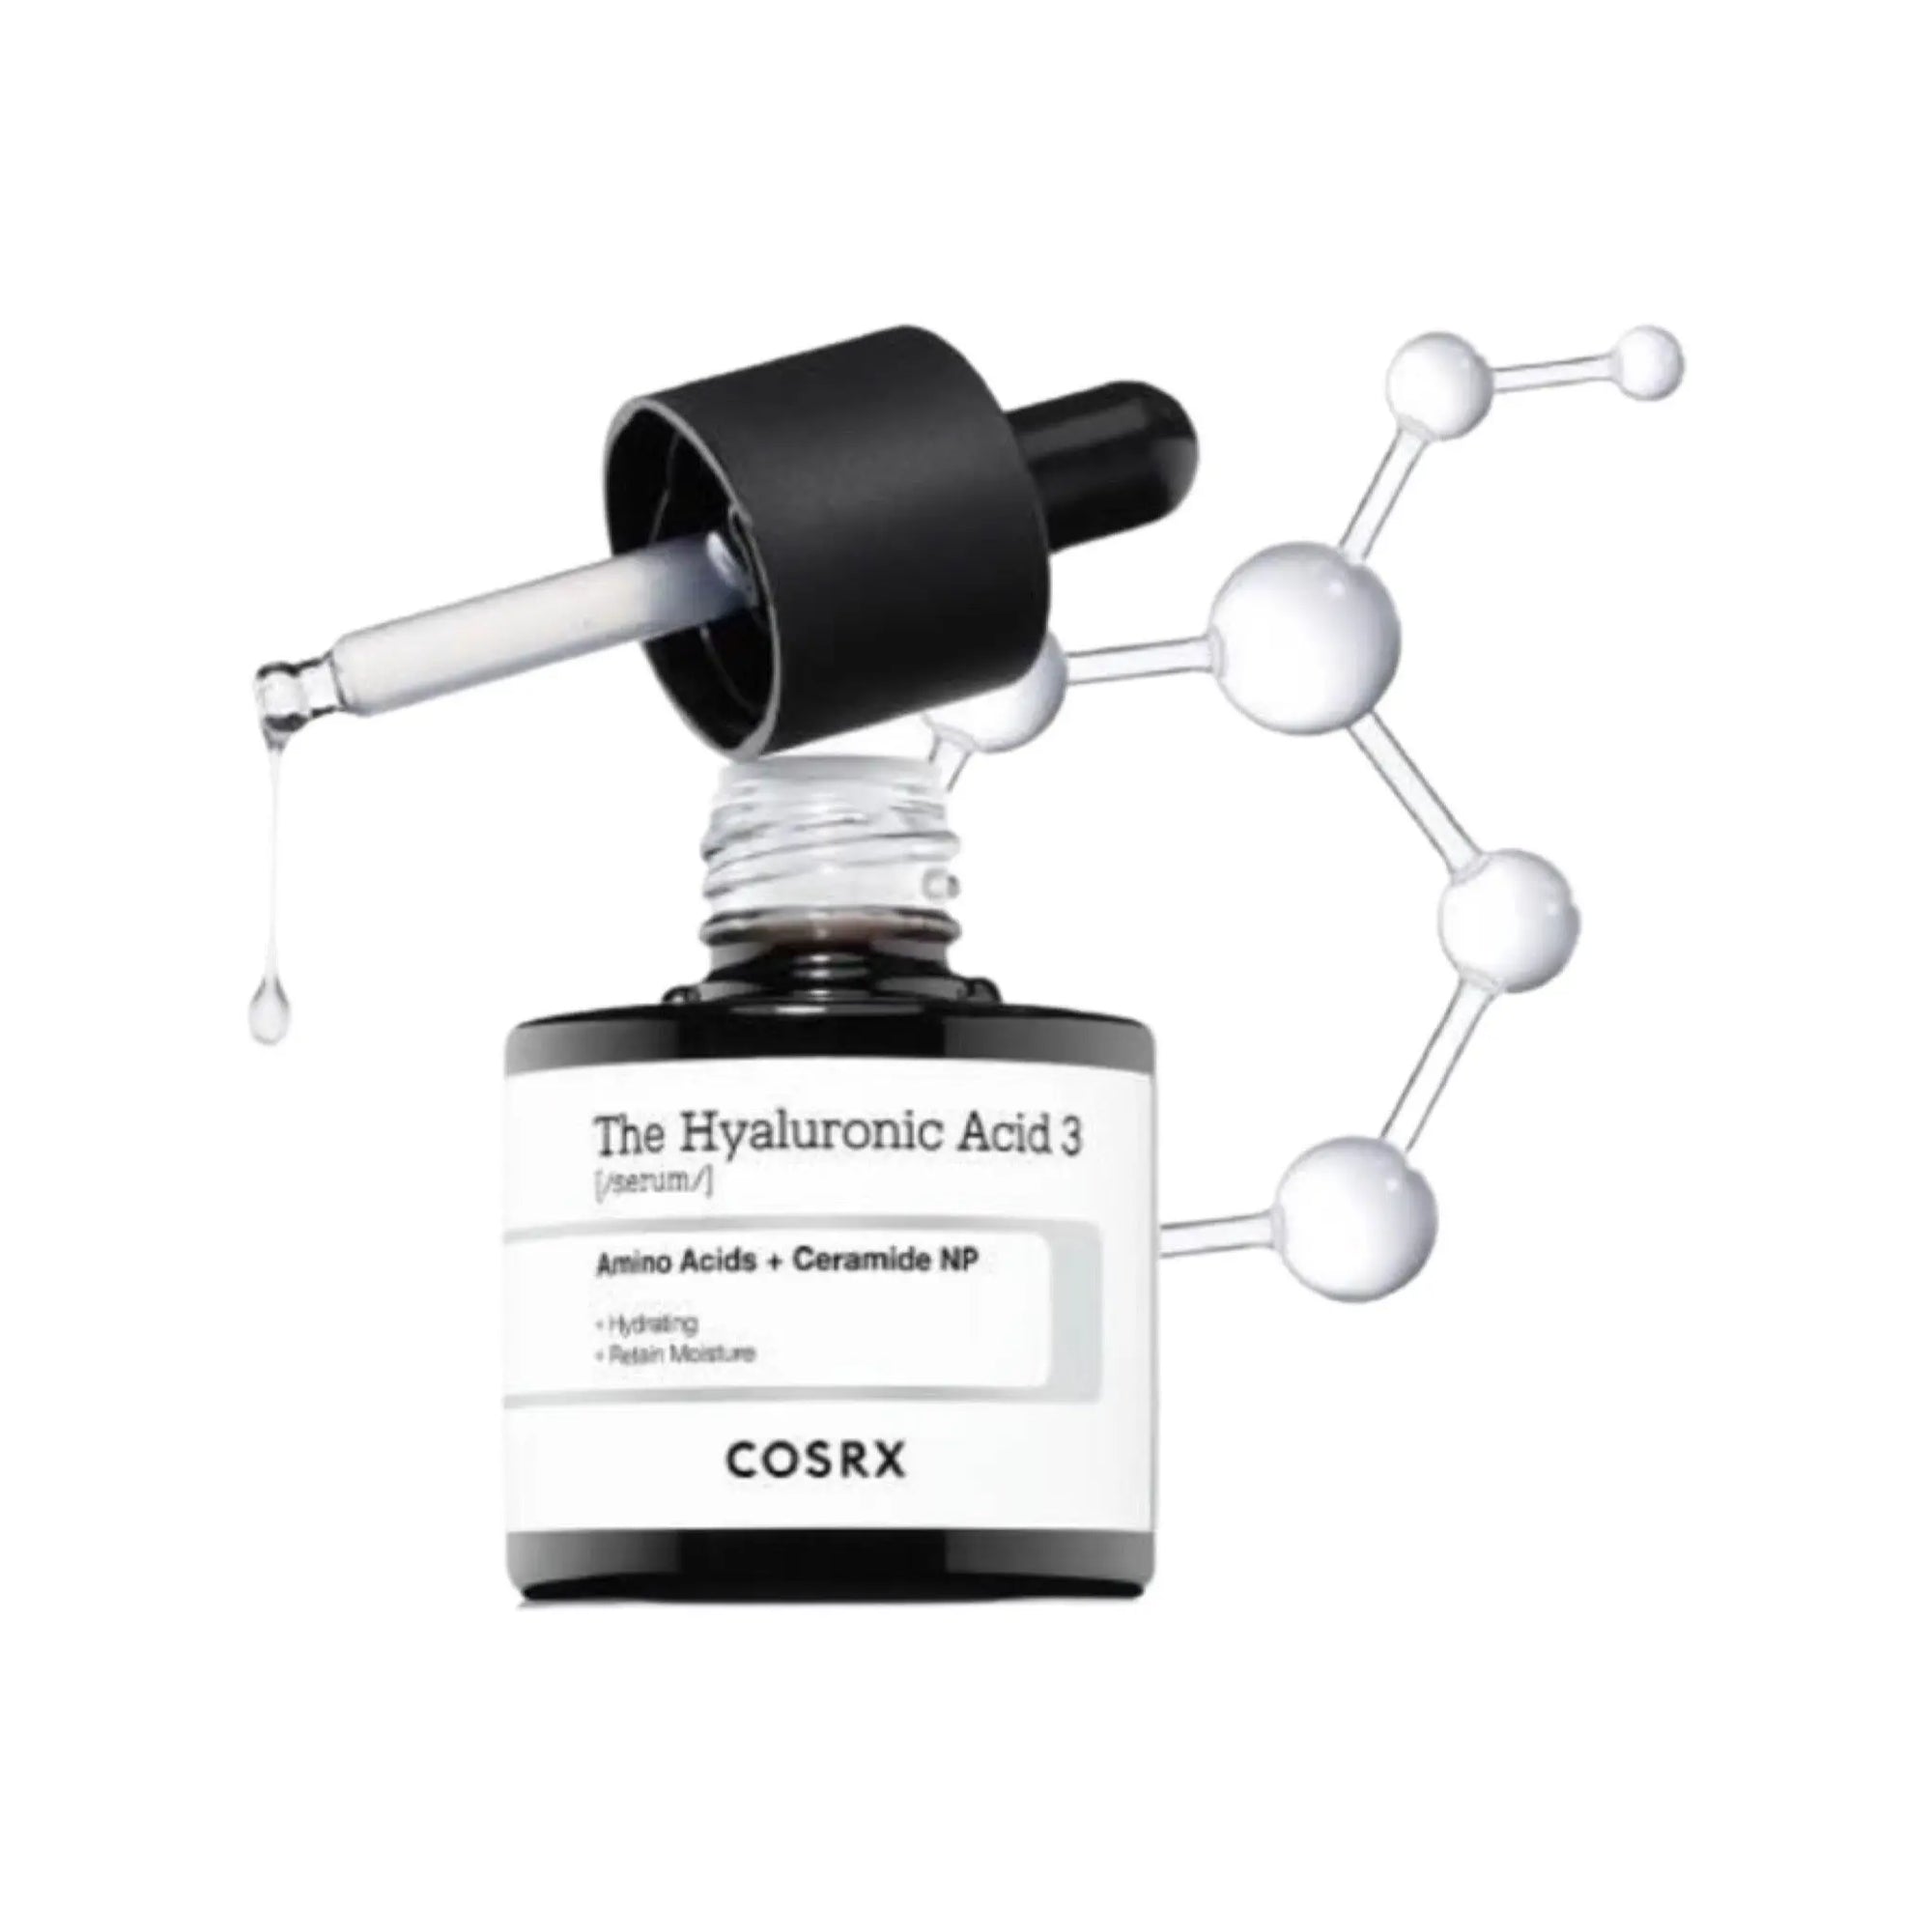 COSRX - The Hyaluronic Acid 3 Serum 20g COSRX